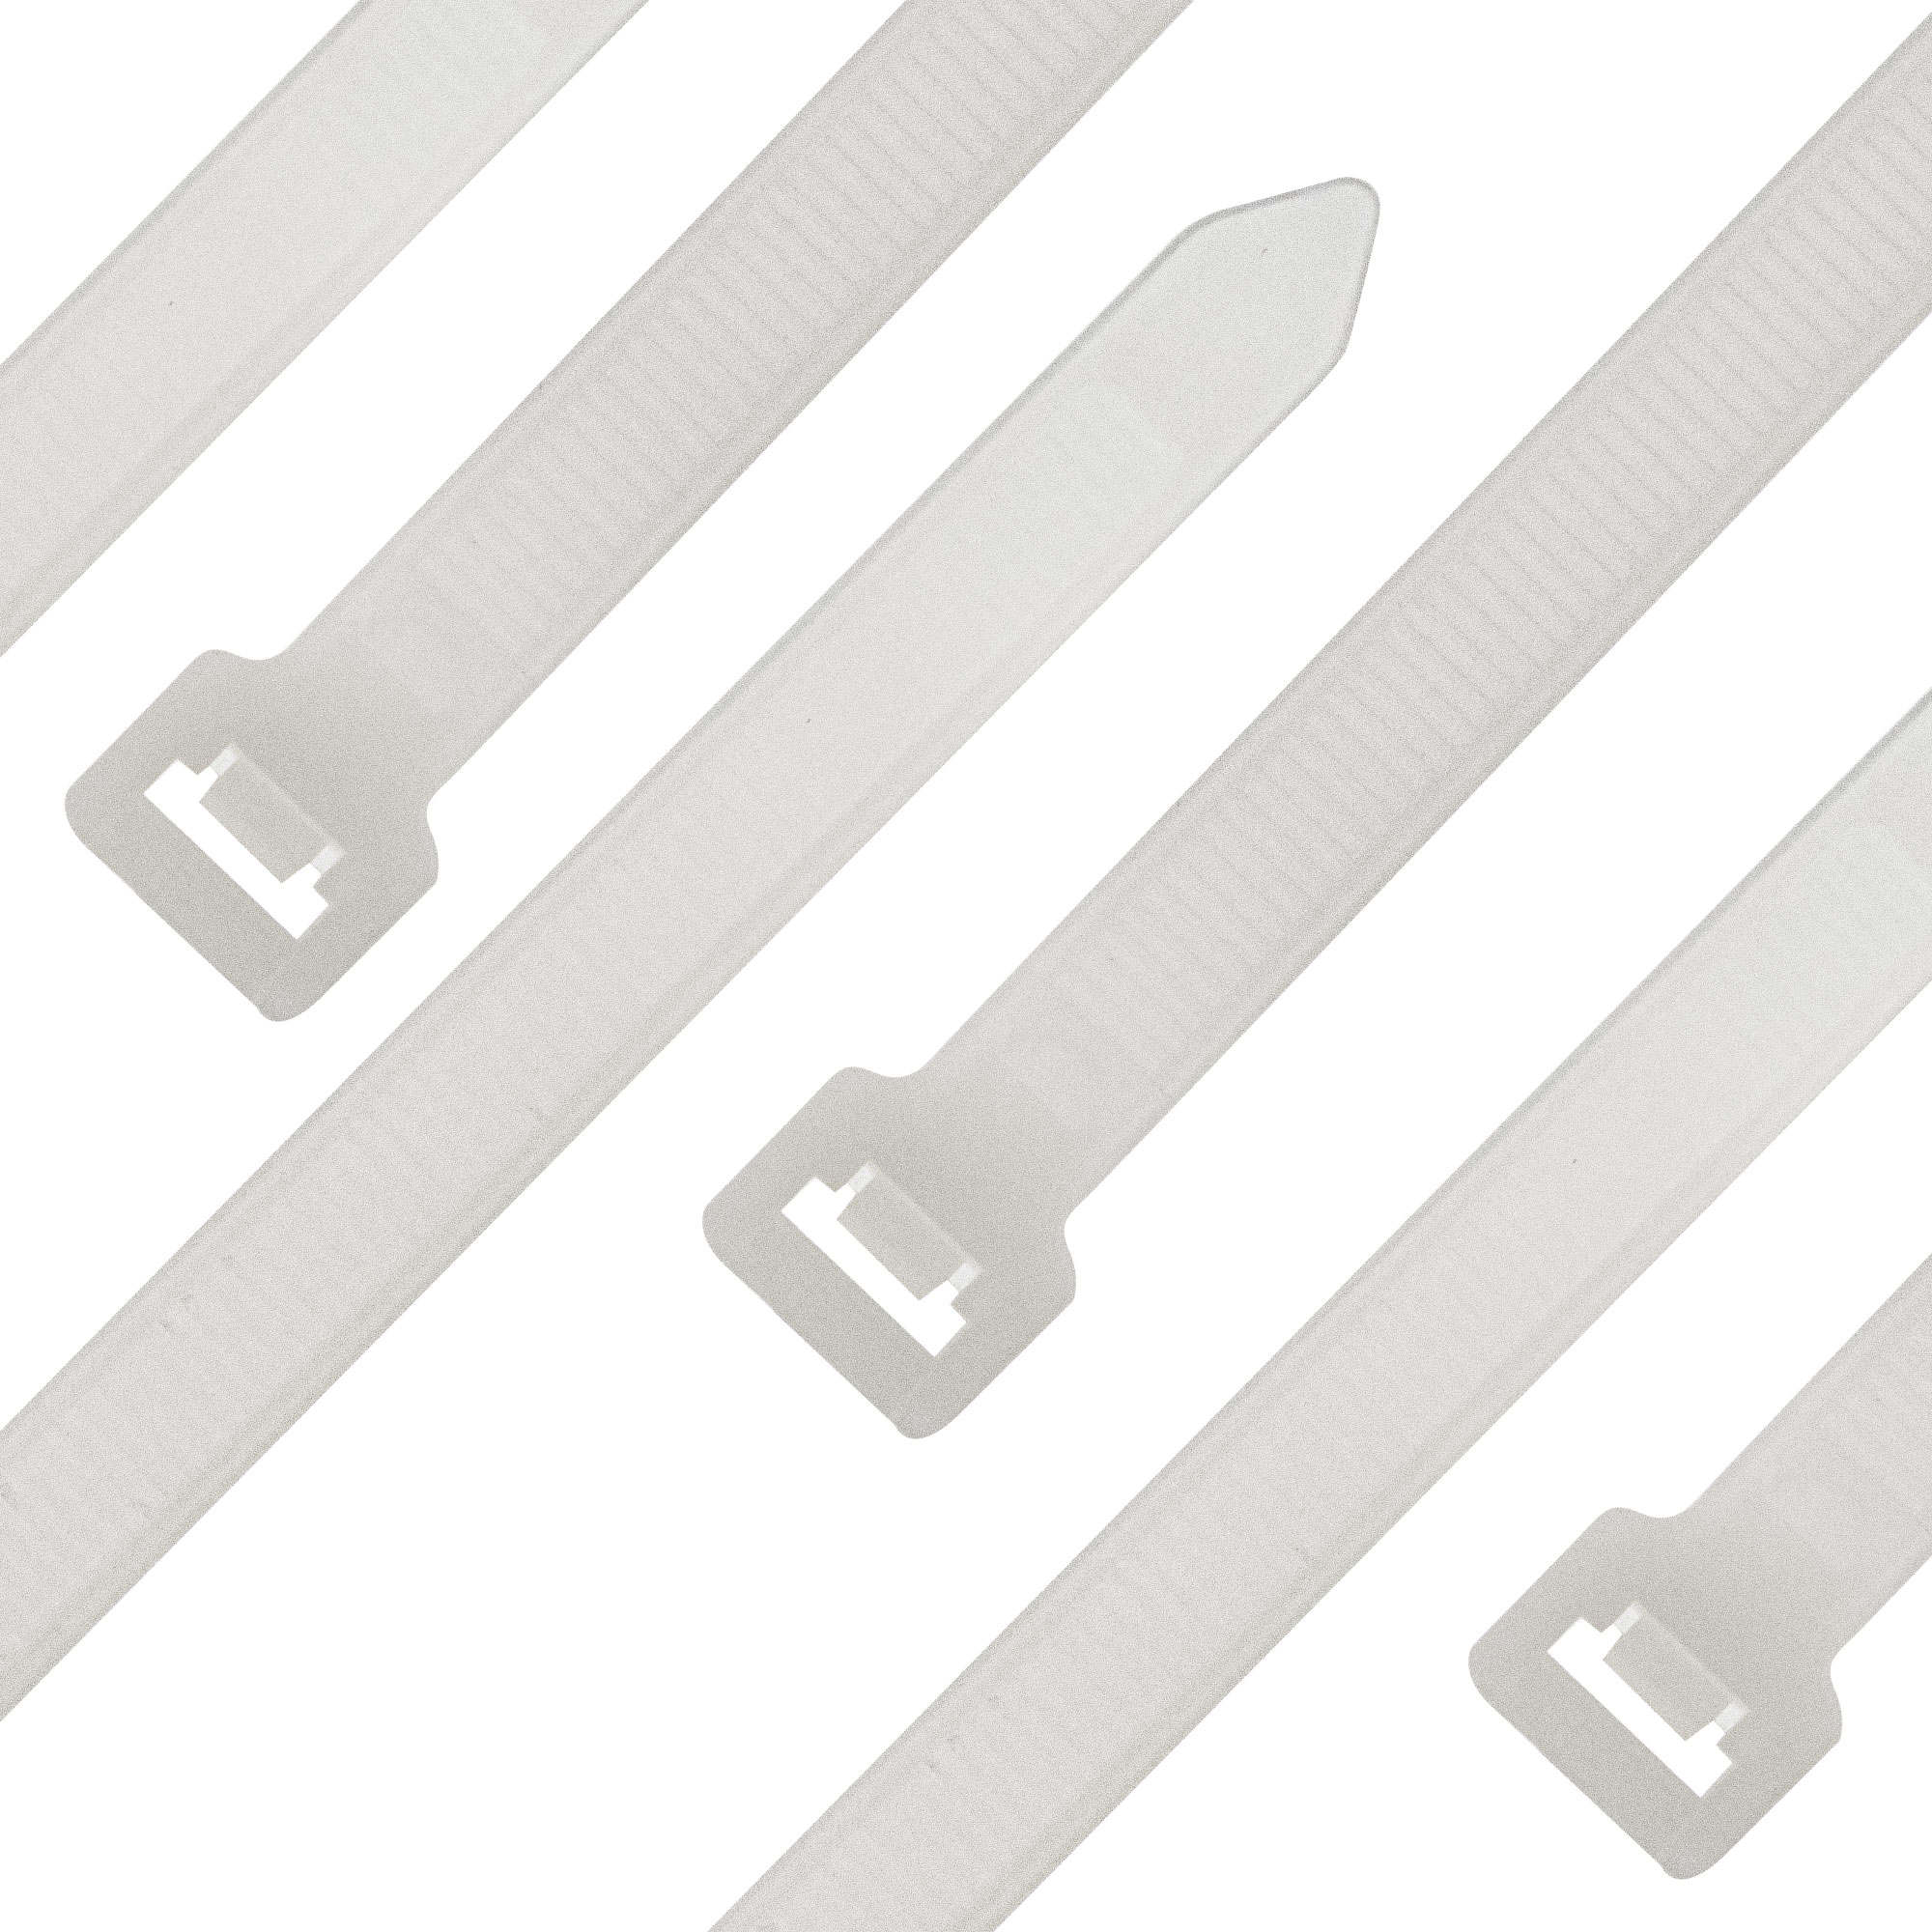 Cable tie self-locking 550 x 9,0mm, white, 100PCS